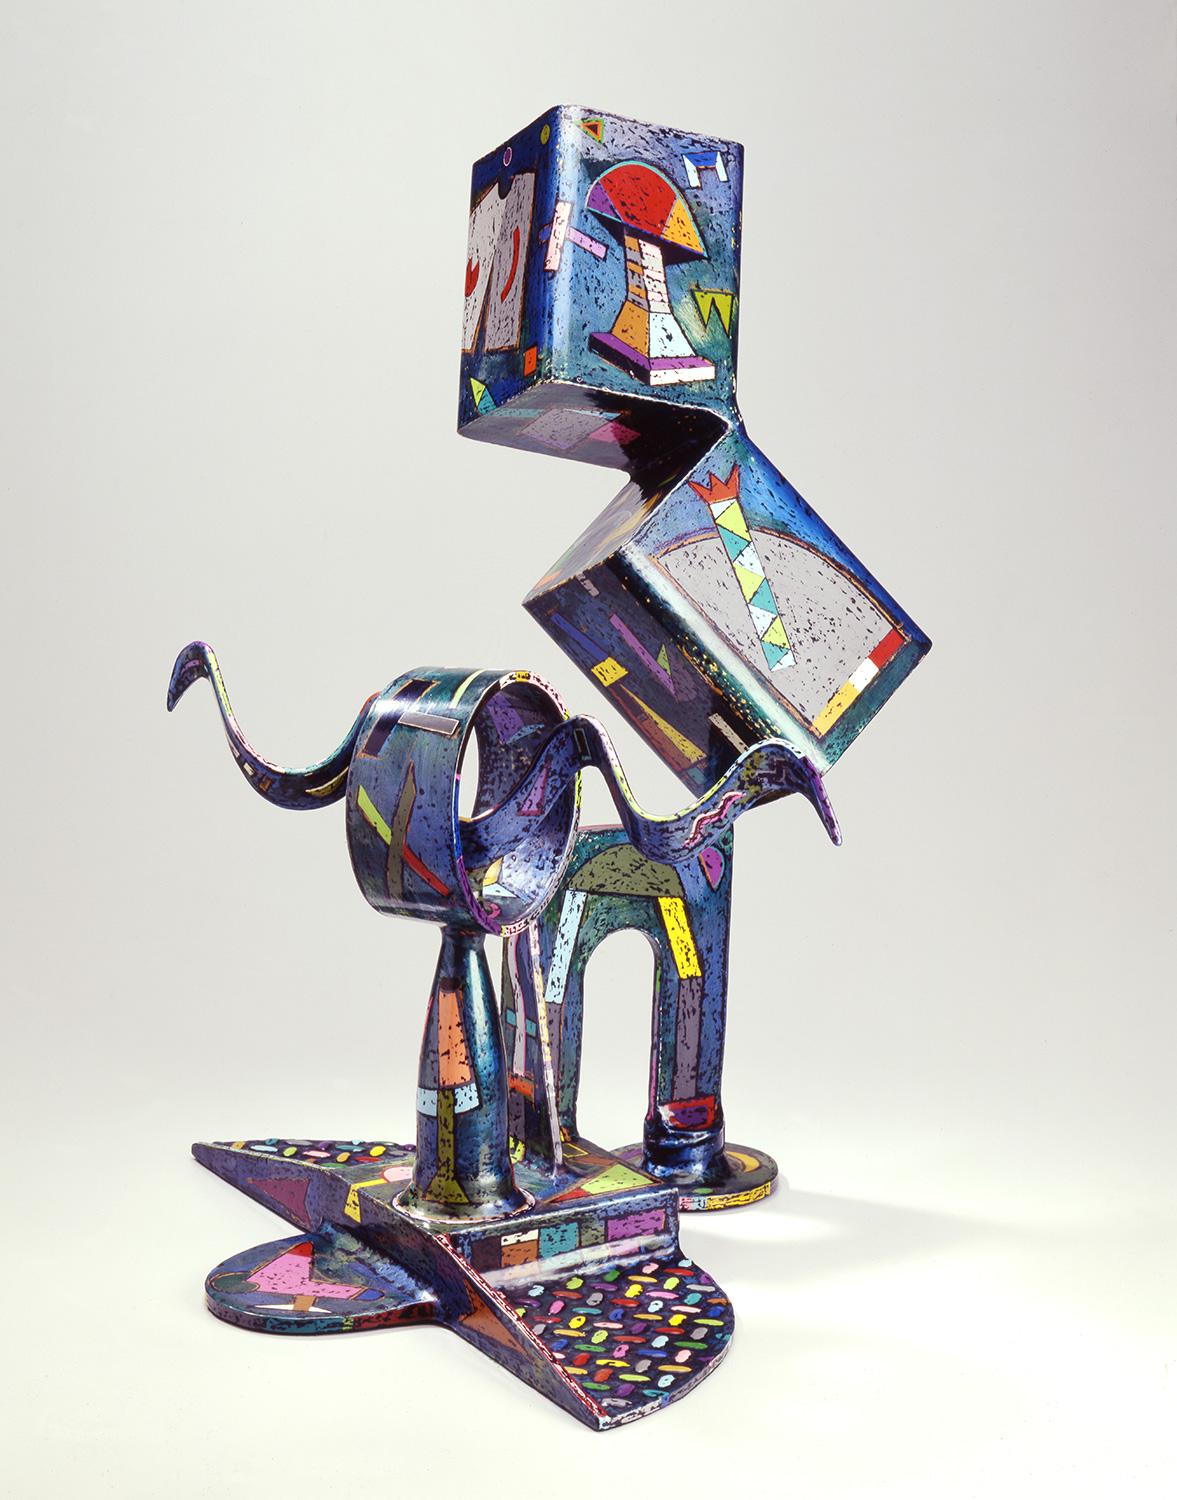 Joseph Slusky Abstract Sculpture - "Zongo" colorful abstract sculpture